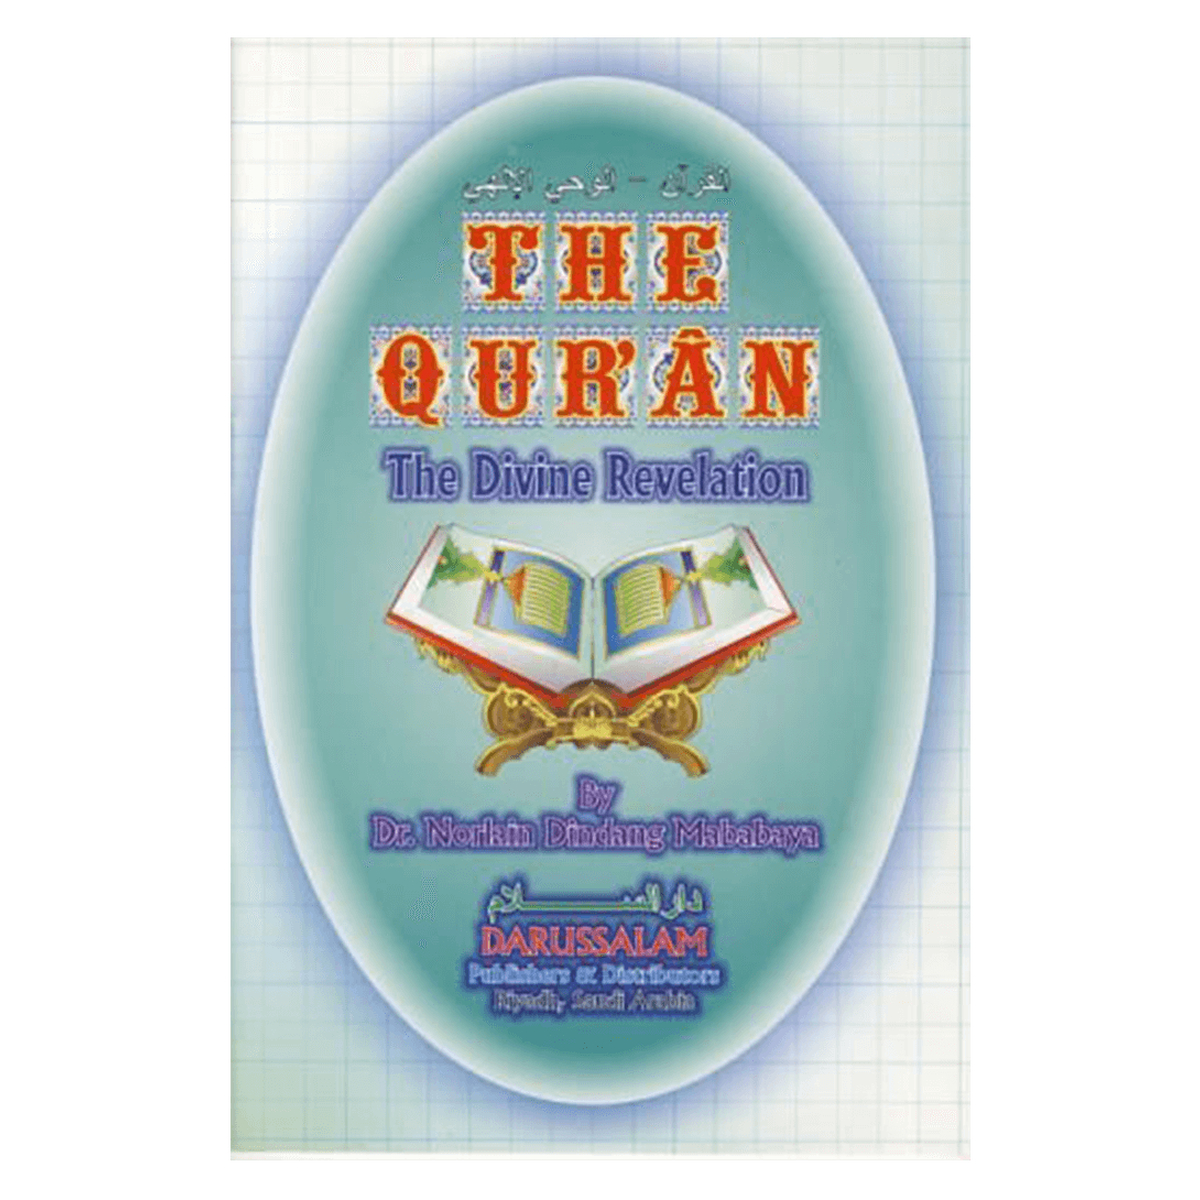 The Quran (The divine revelation)